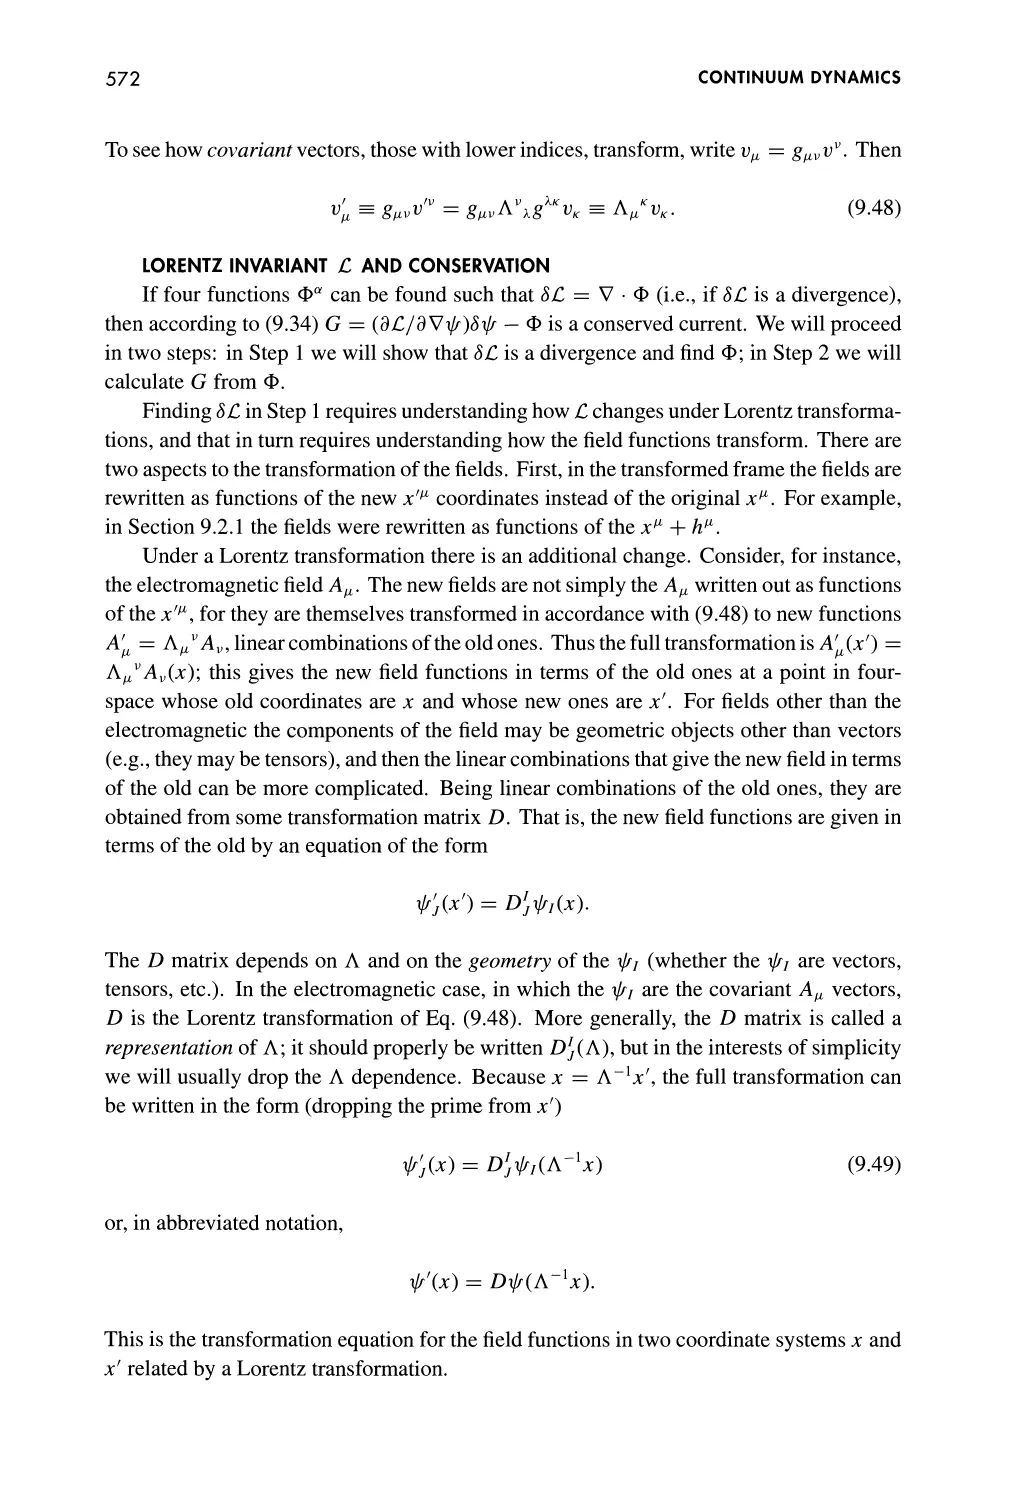 Lorentz Invariant L and Conservation